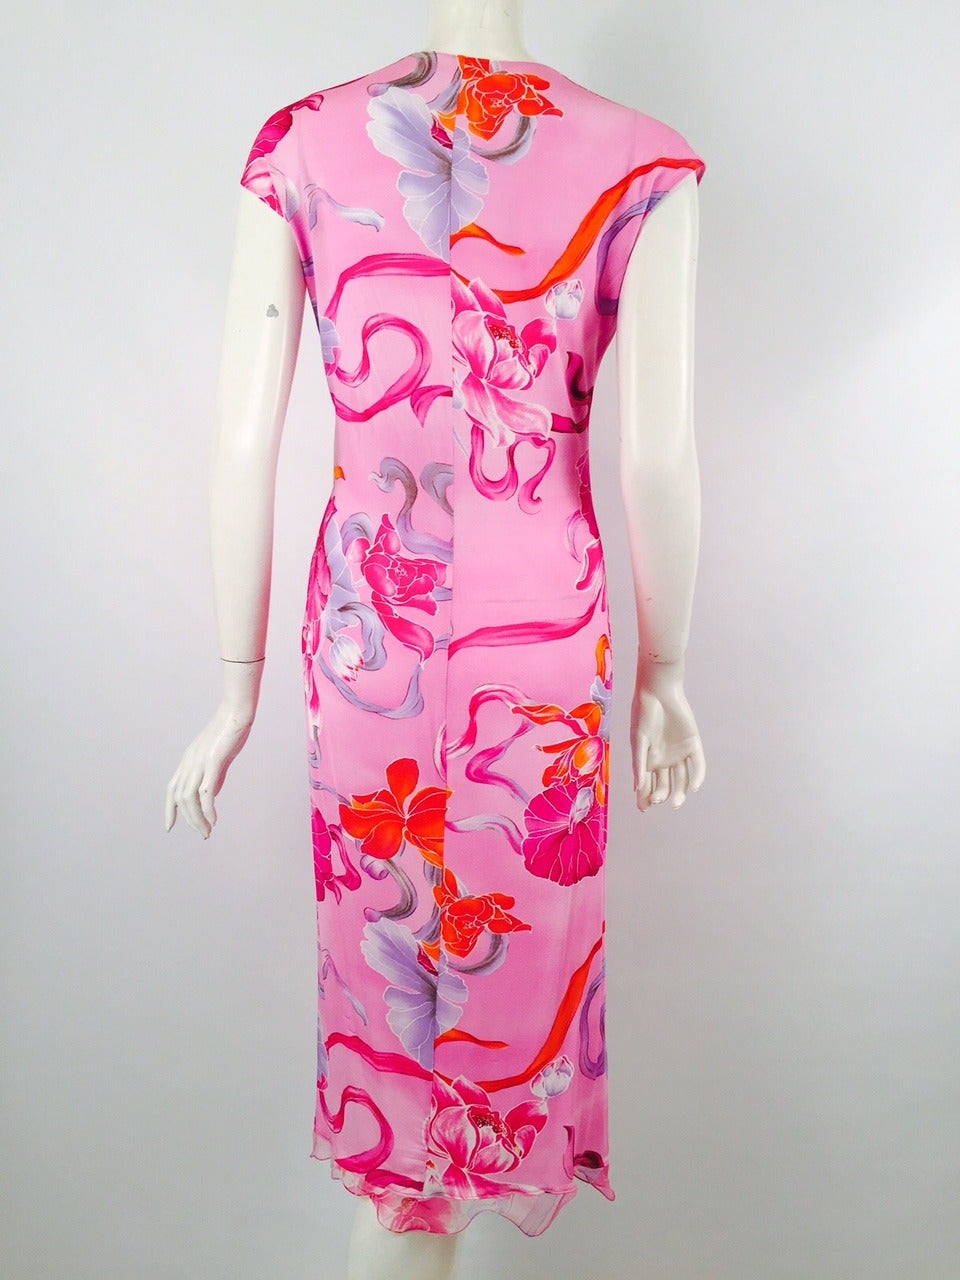 Emanuel Ungaro Pink Floral Bias Cut Wrap Dress In Excellent Condition For Sale In Palm Beach, FL